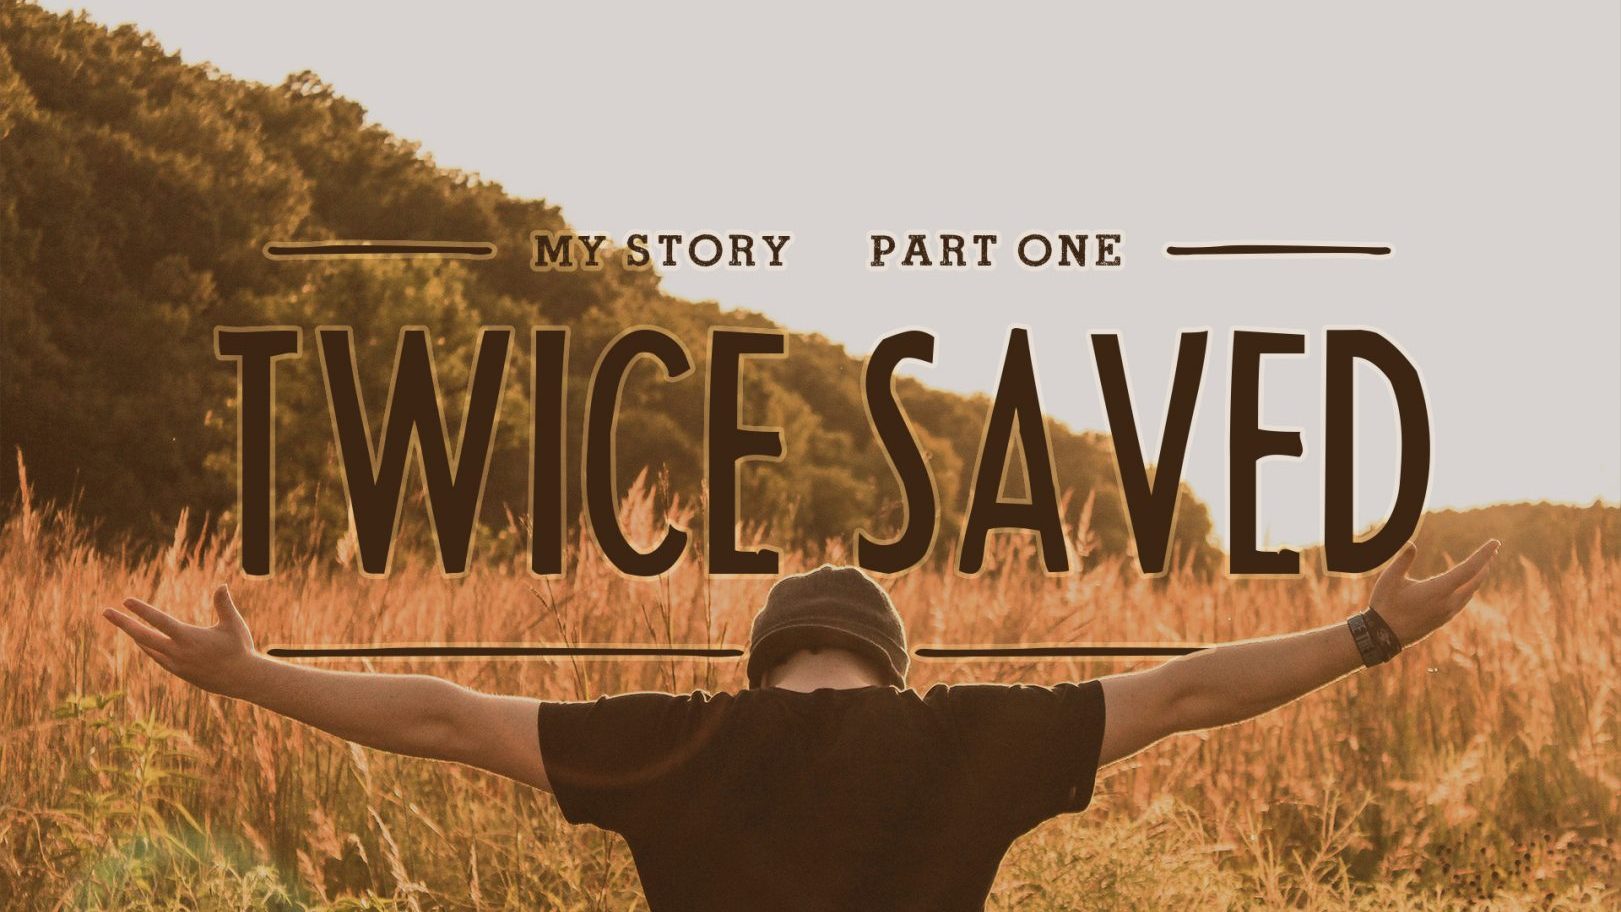 My Story: Twice Saved